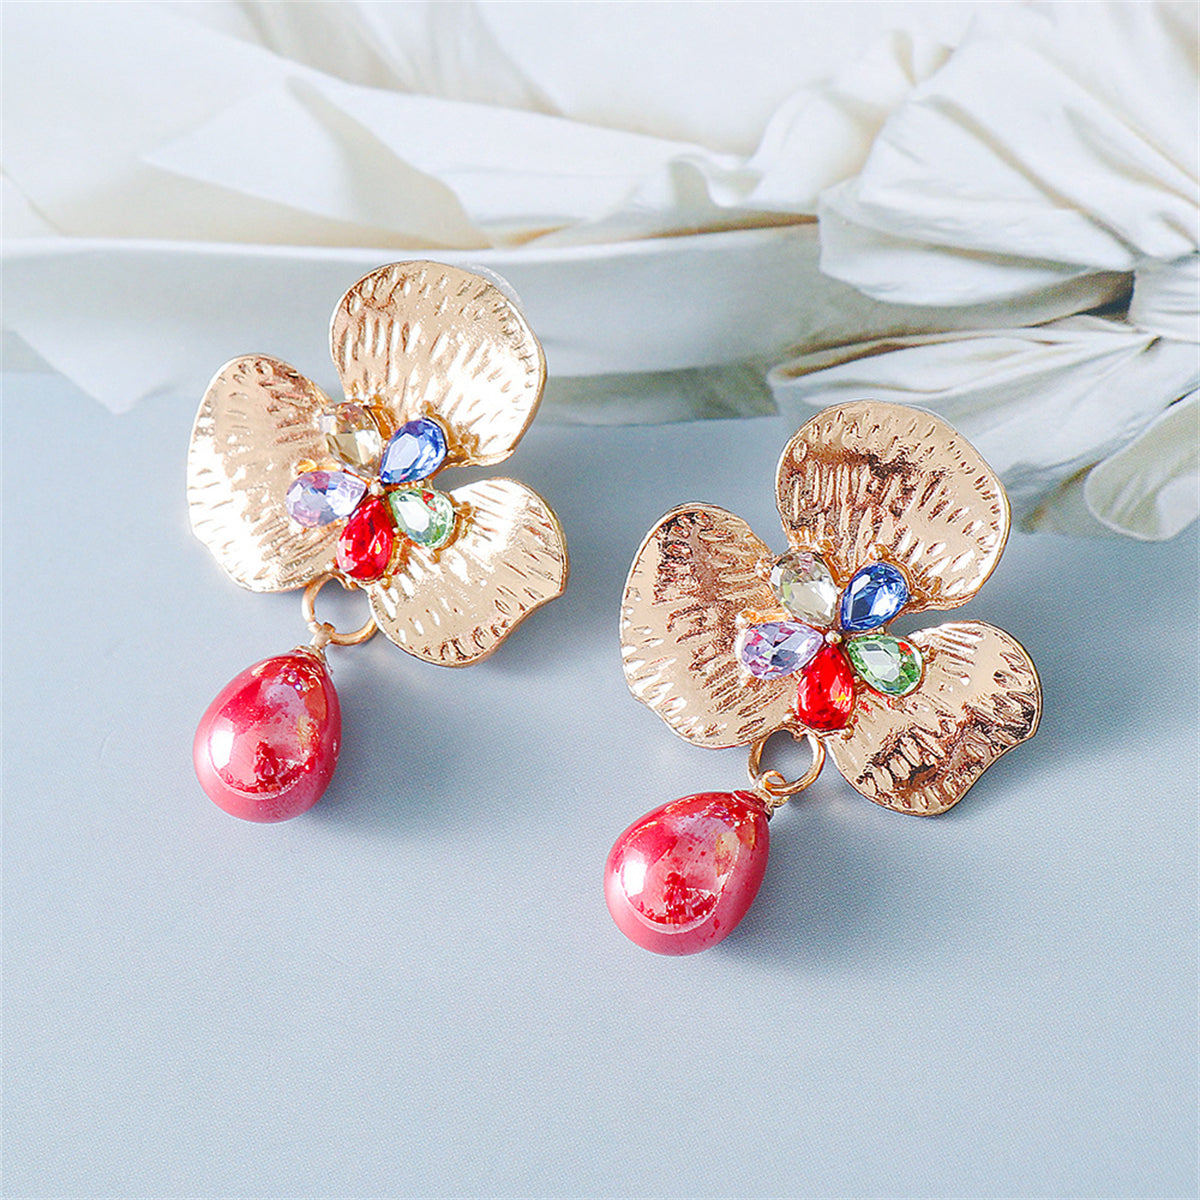 Red Pearl & Crystal 18K Gold-Plated Flower Drop Earrings